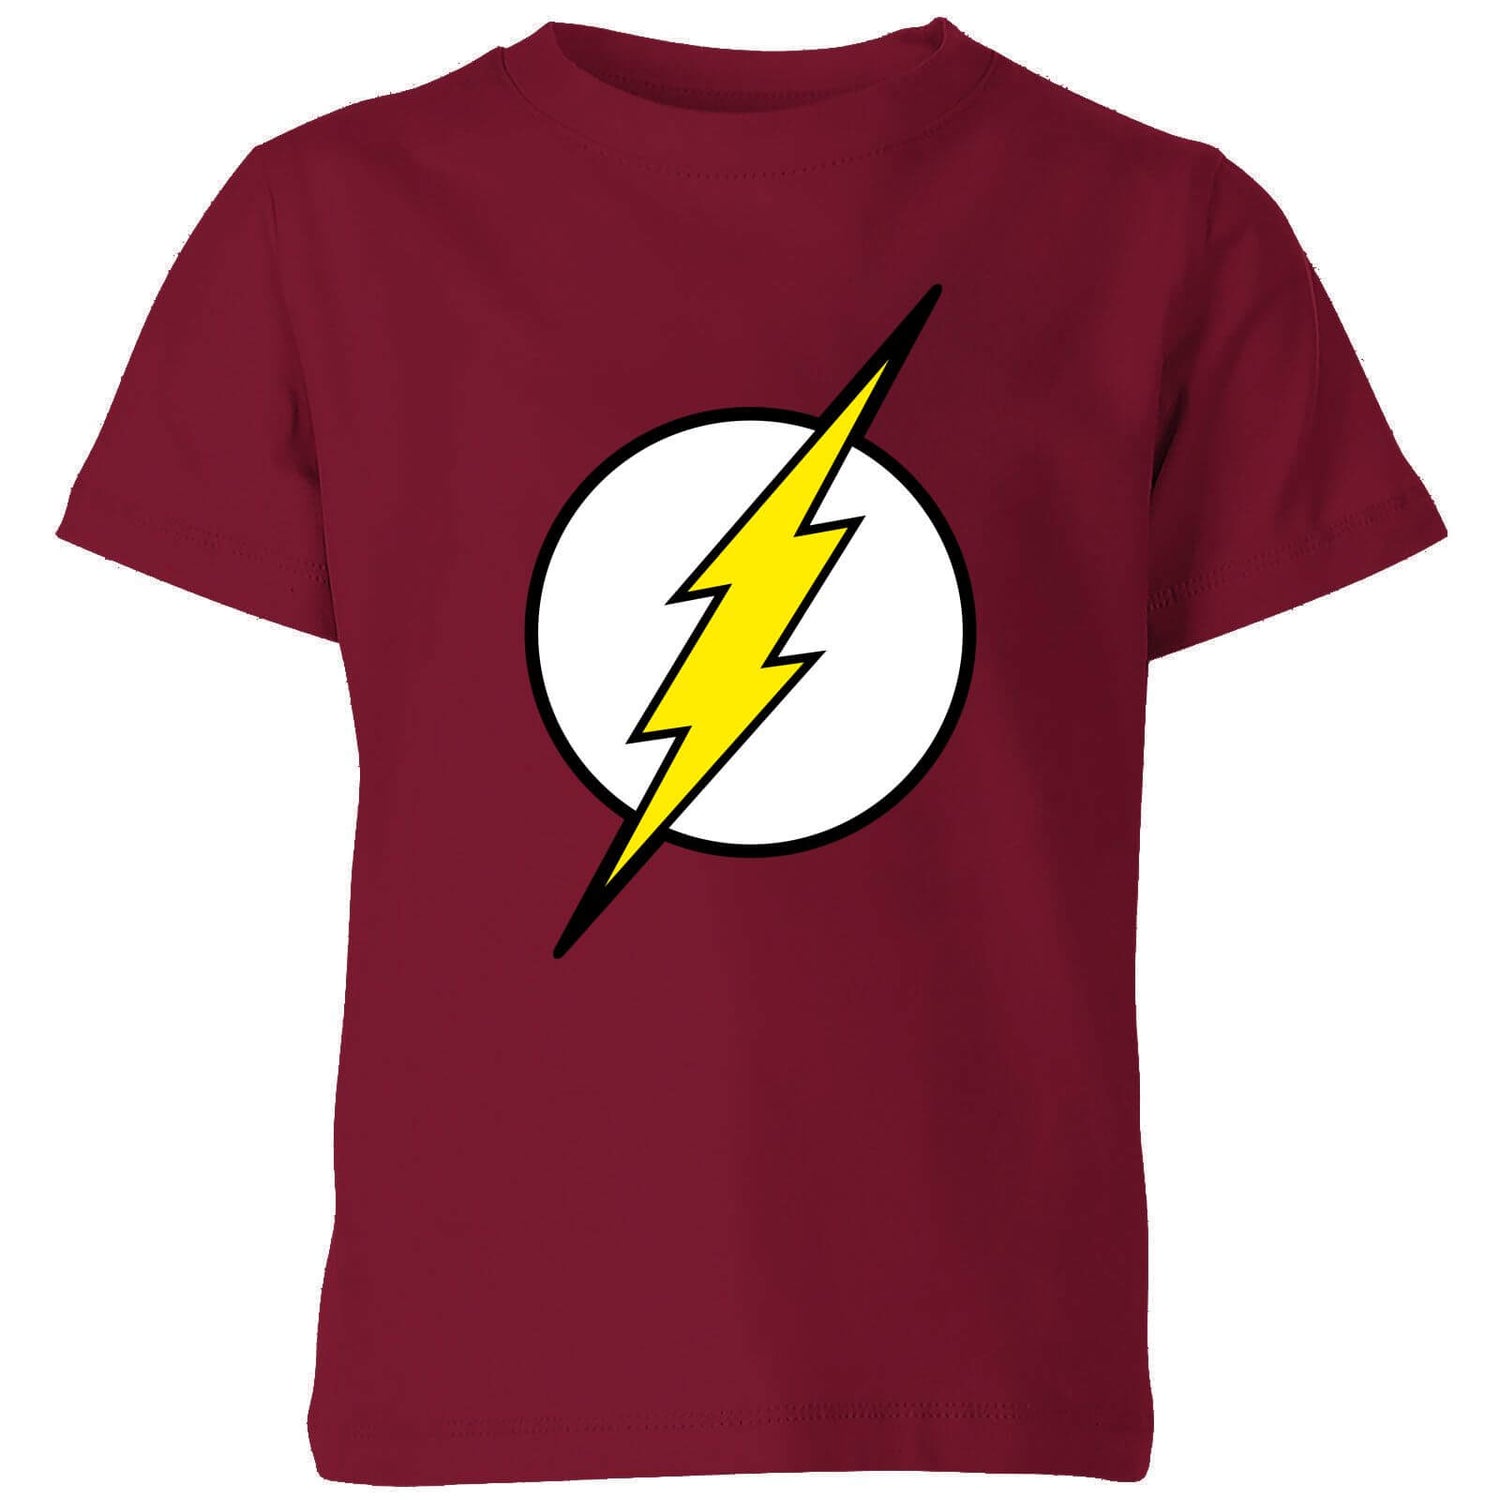 Justice League Flash Logo Kids' T-Shirt - Burgundy